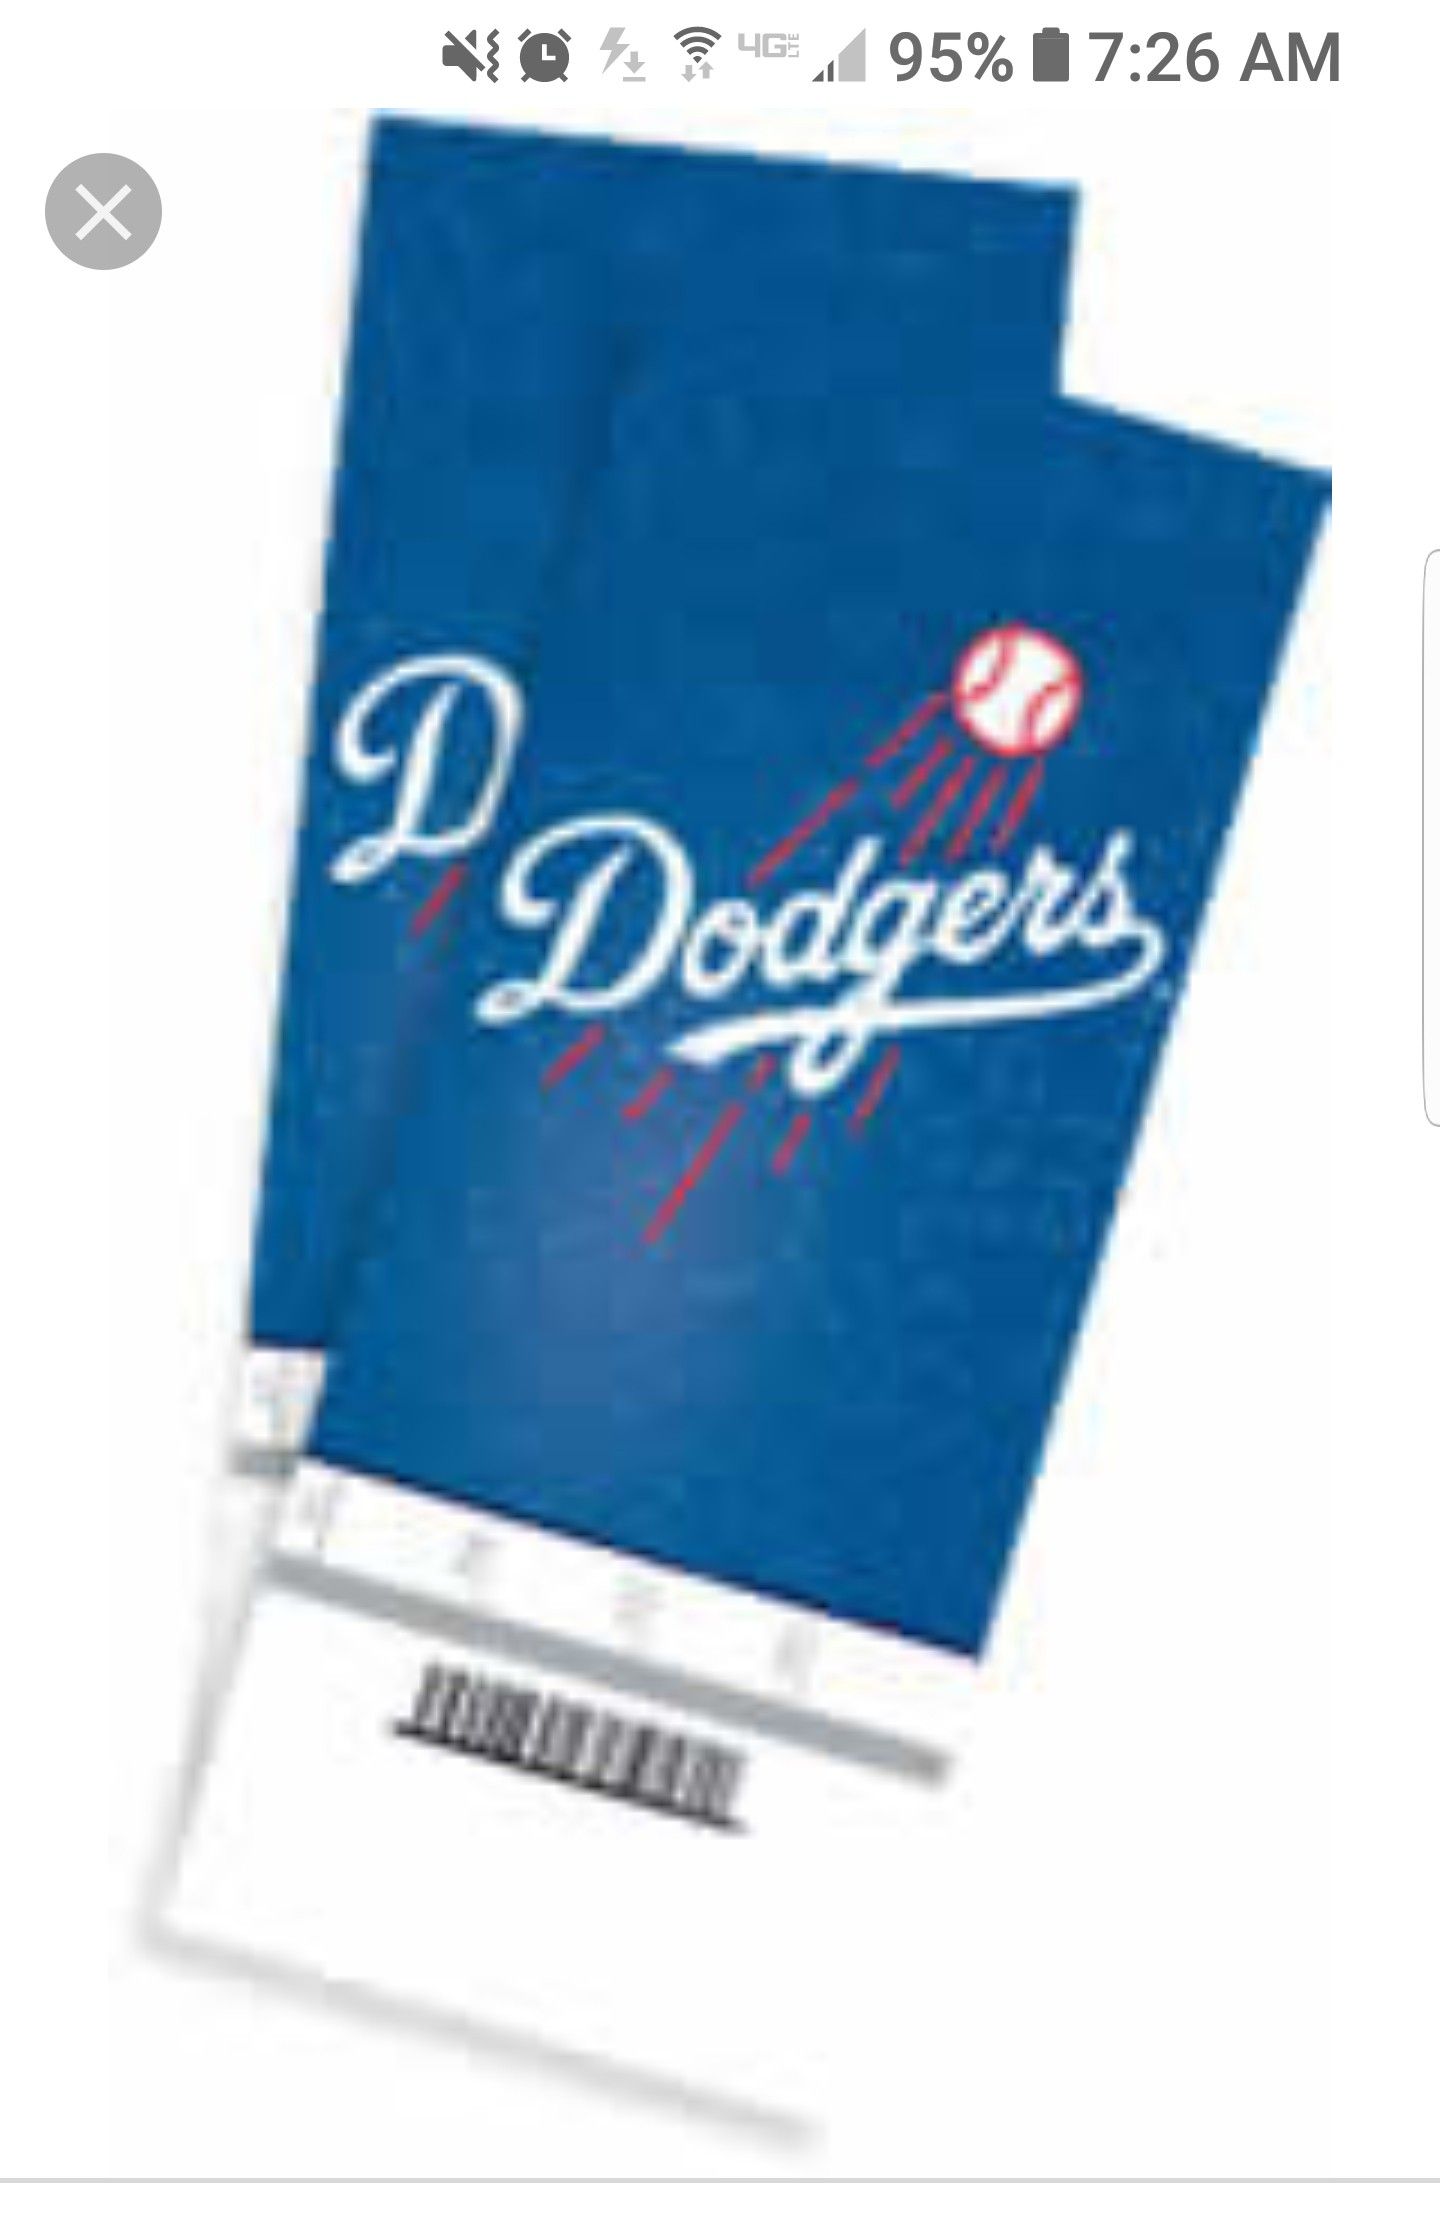 2 Dodgers vs Diamondbacks tickets